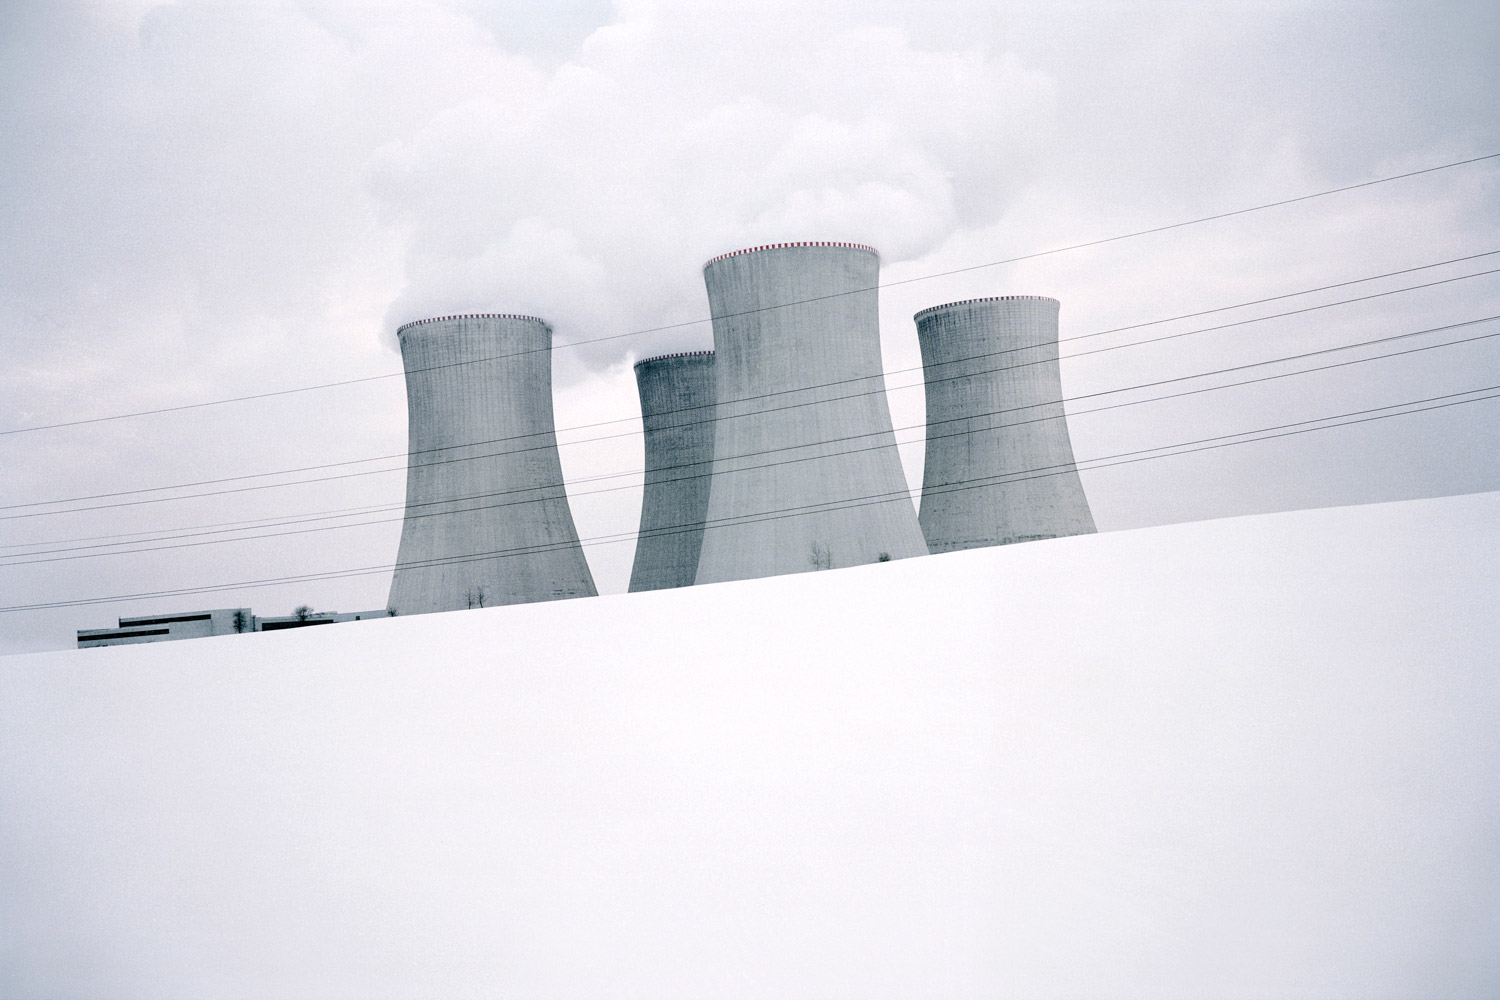 nucleur power Czech Republic 2